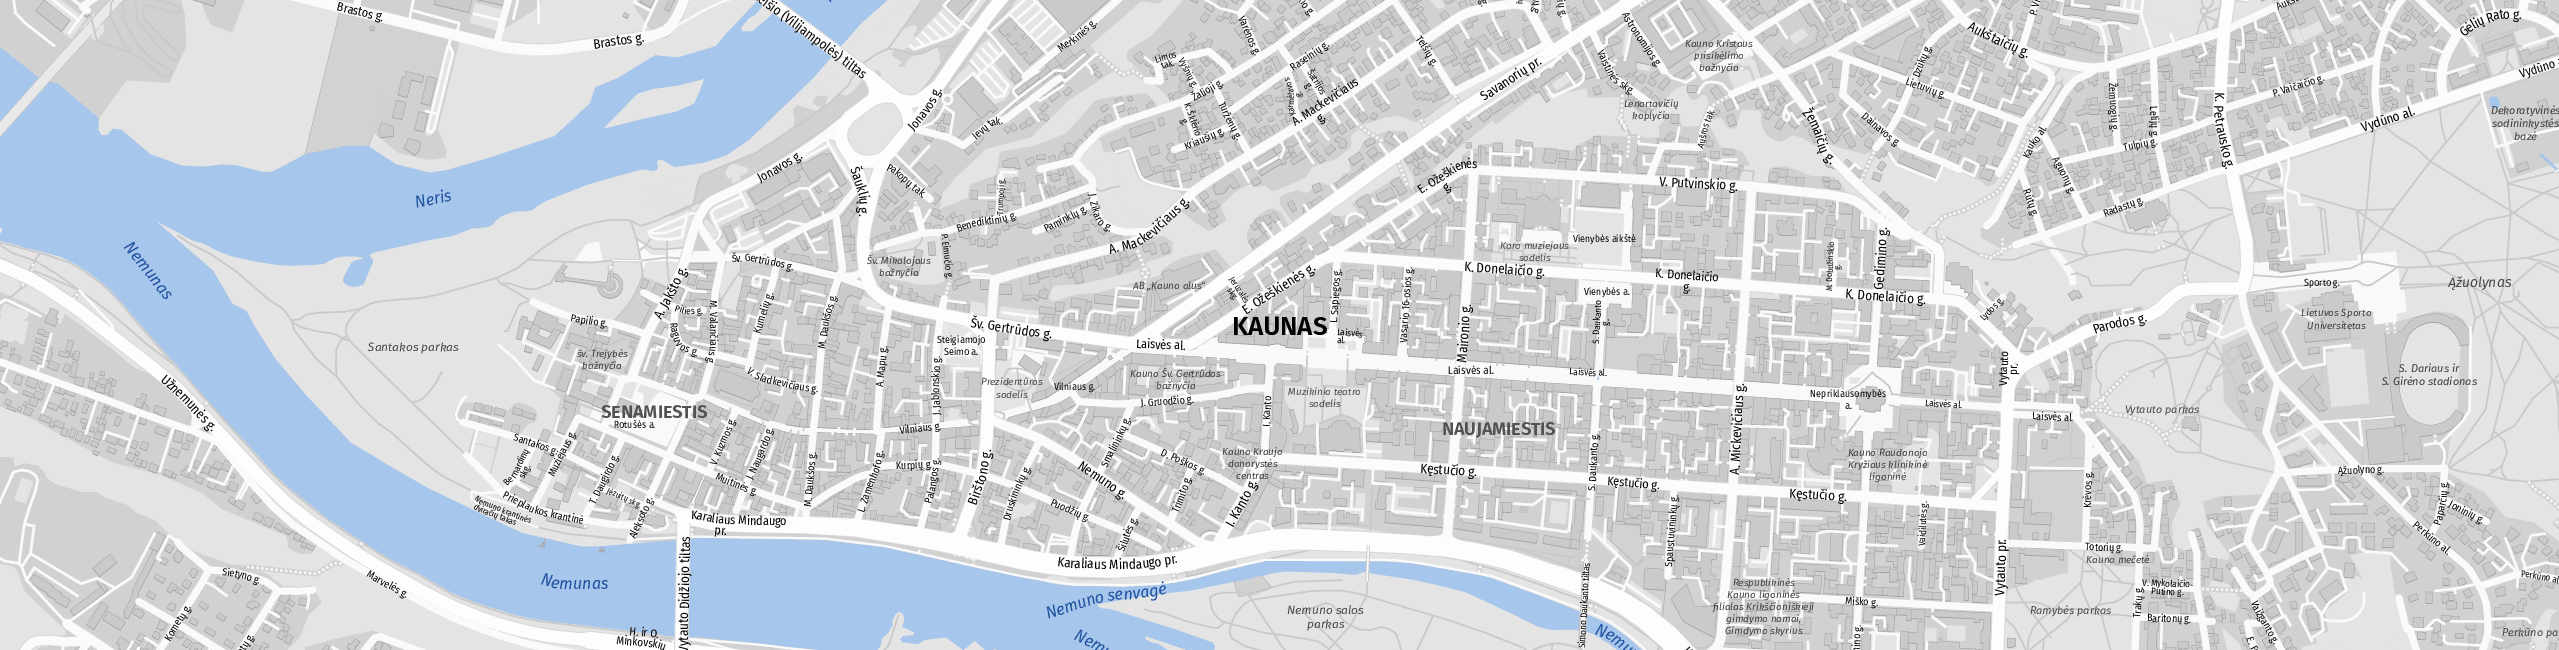 Stadtplan Kaunas zum Downloaden.